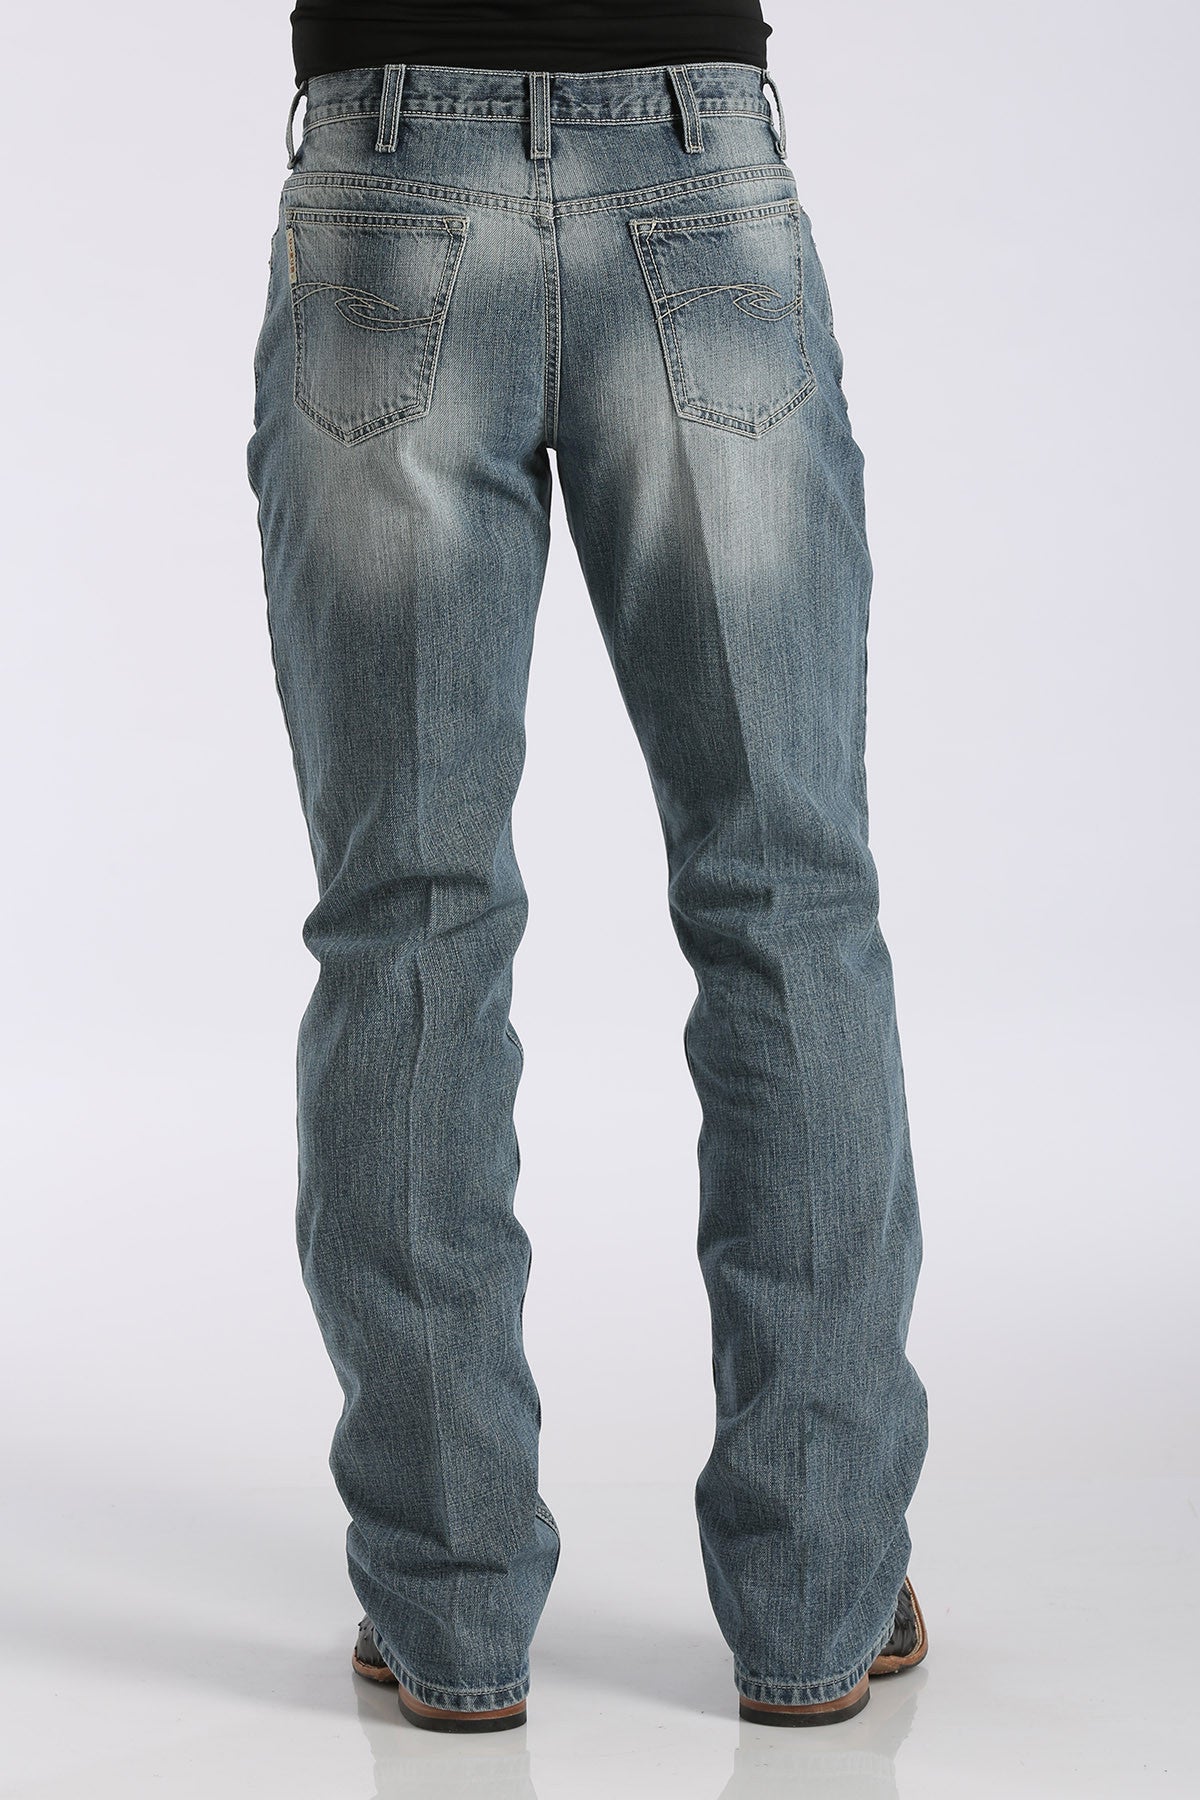 cinch dooley jeans